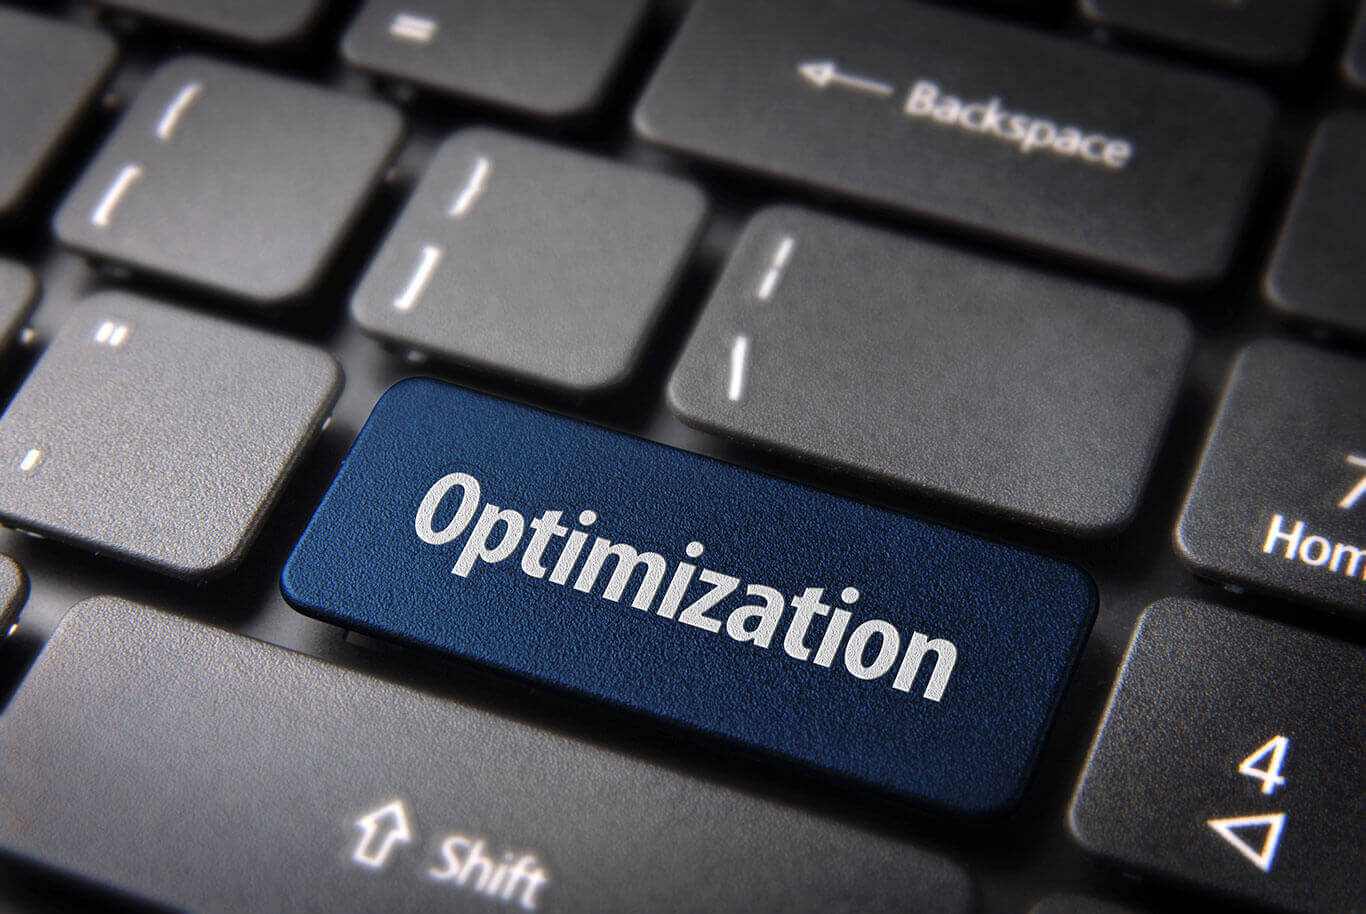 Image Optimization Tips To Improve Business ROI